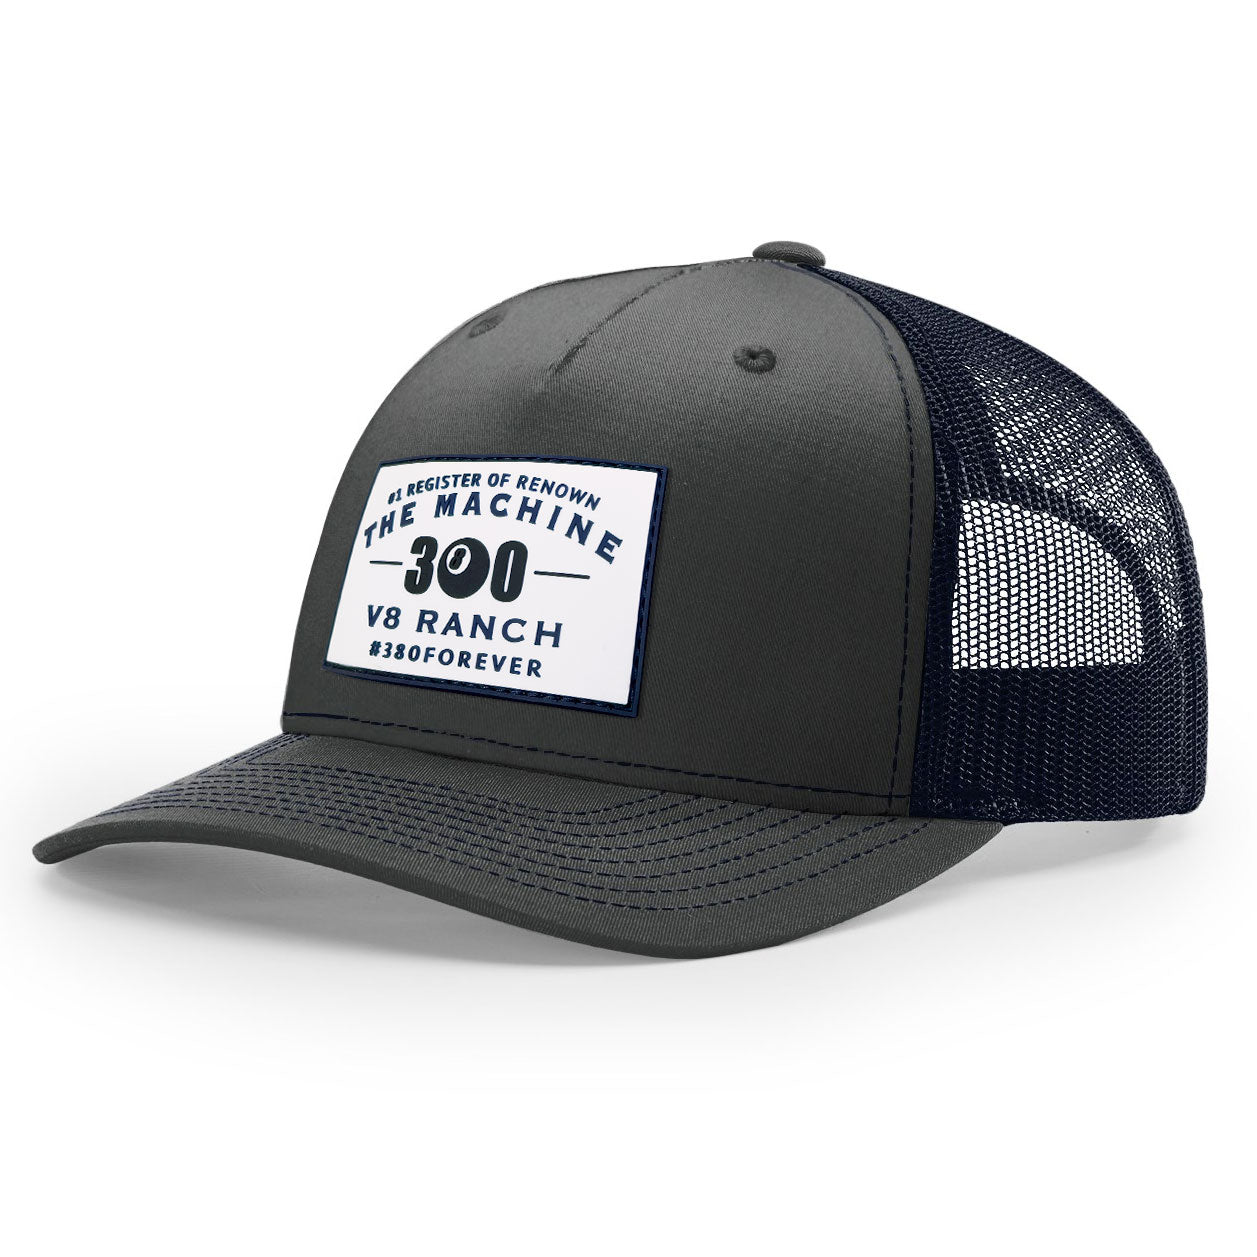 380 Forever Grey/Navy Trucker Cap